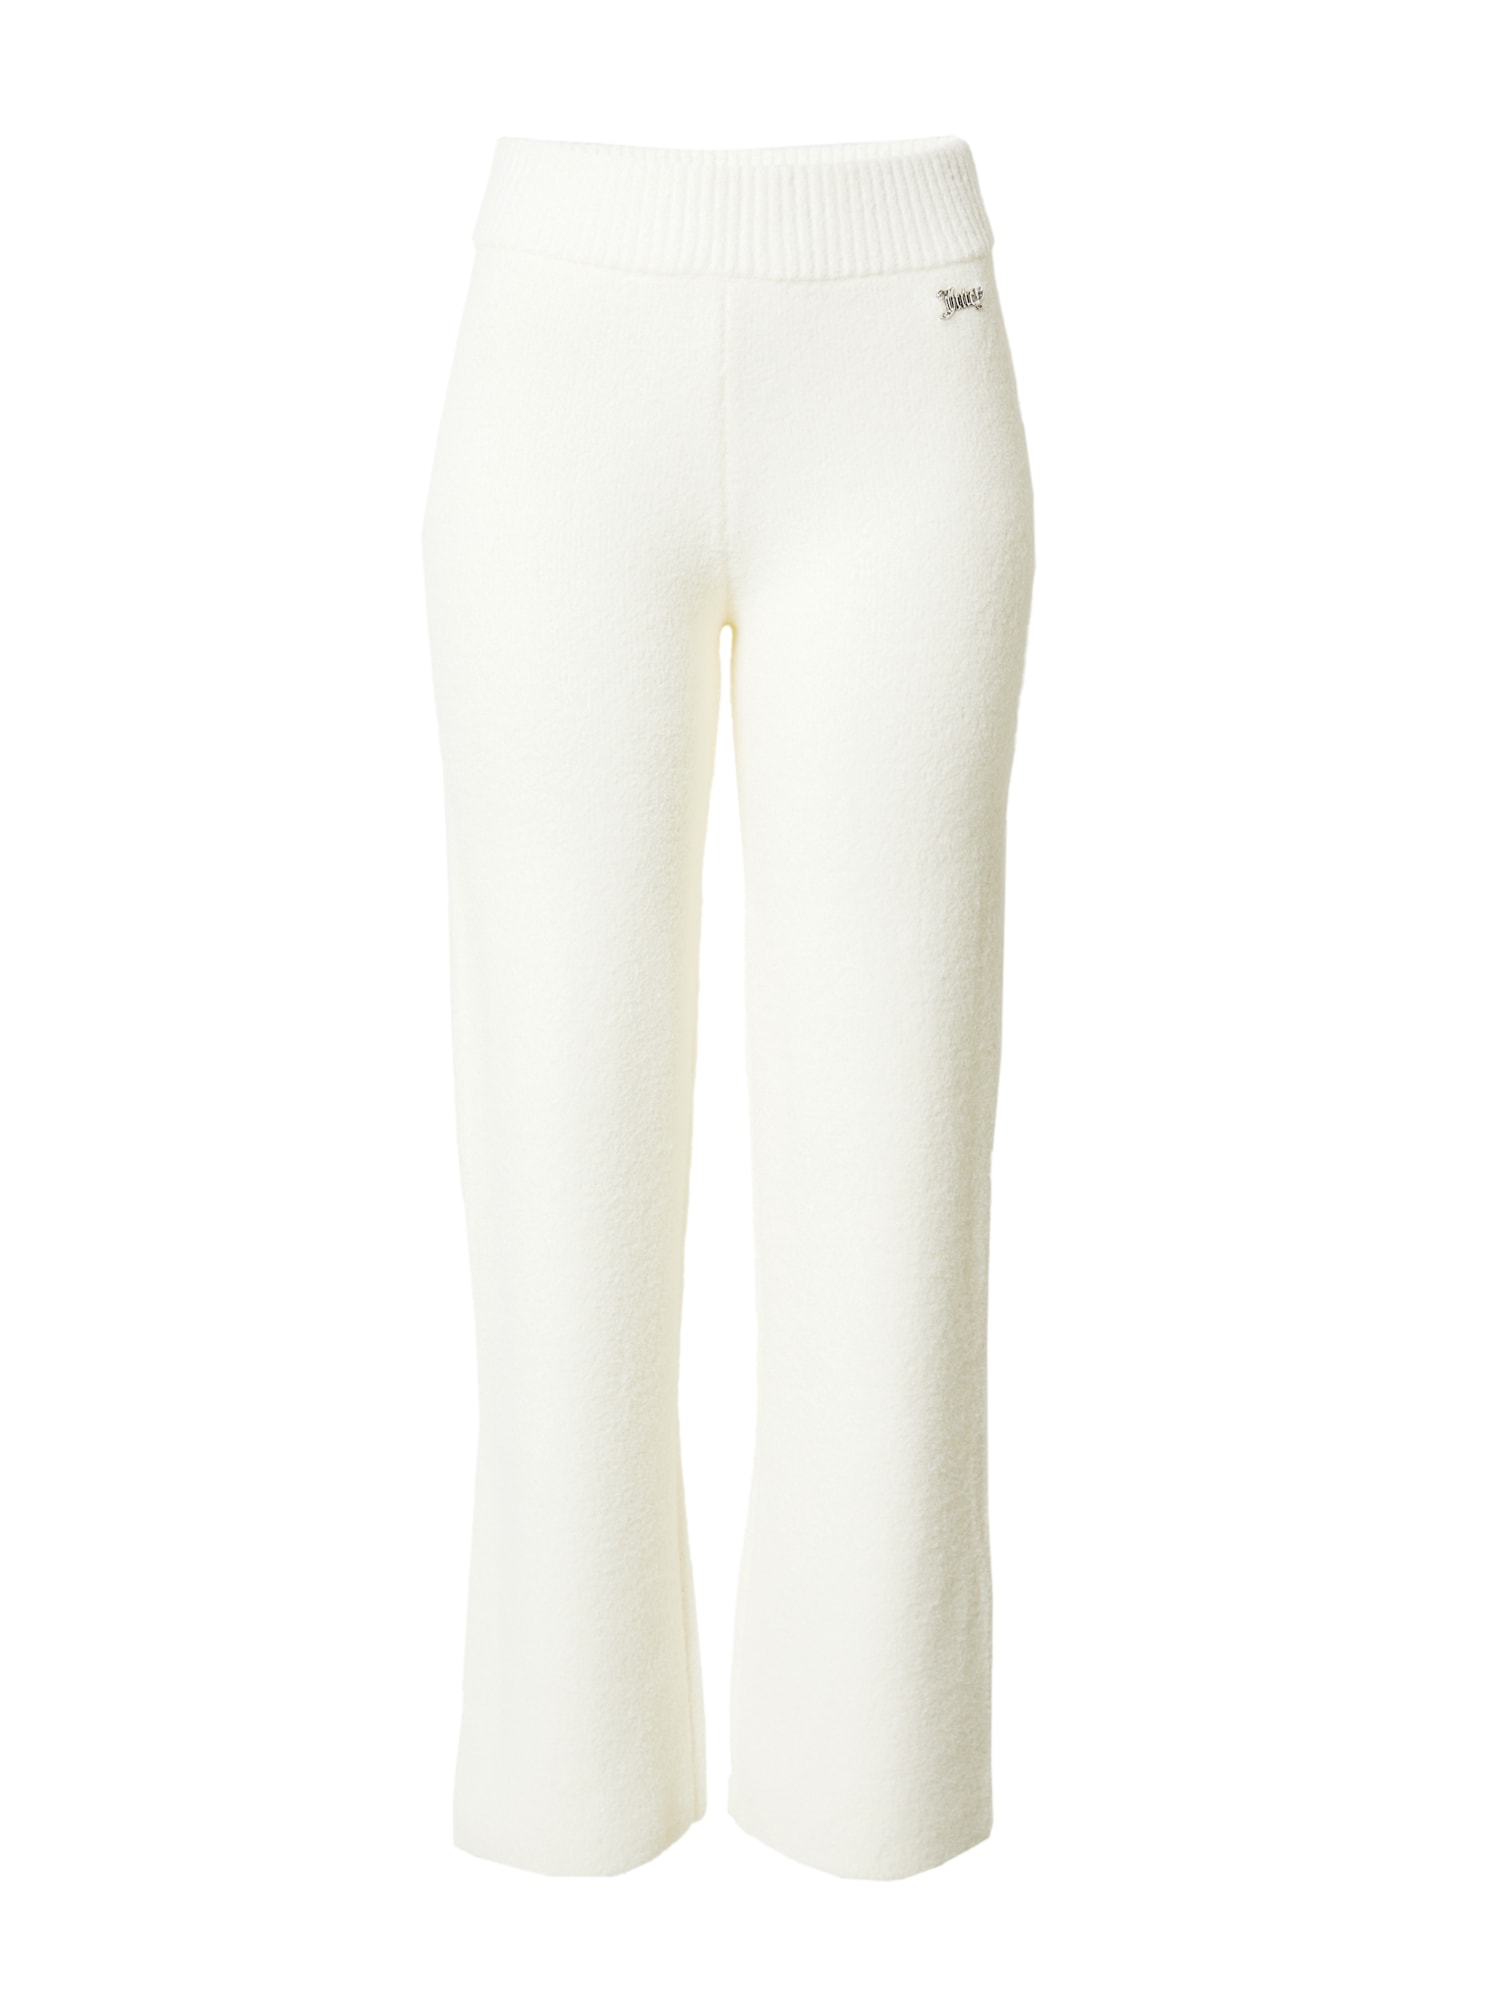 Juicy Couture Black Label Pantaloni  bianco naturale